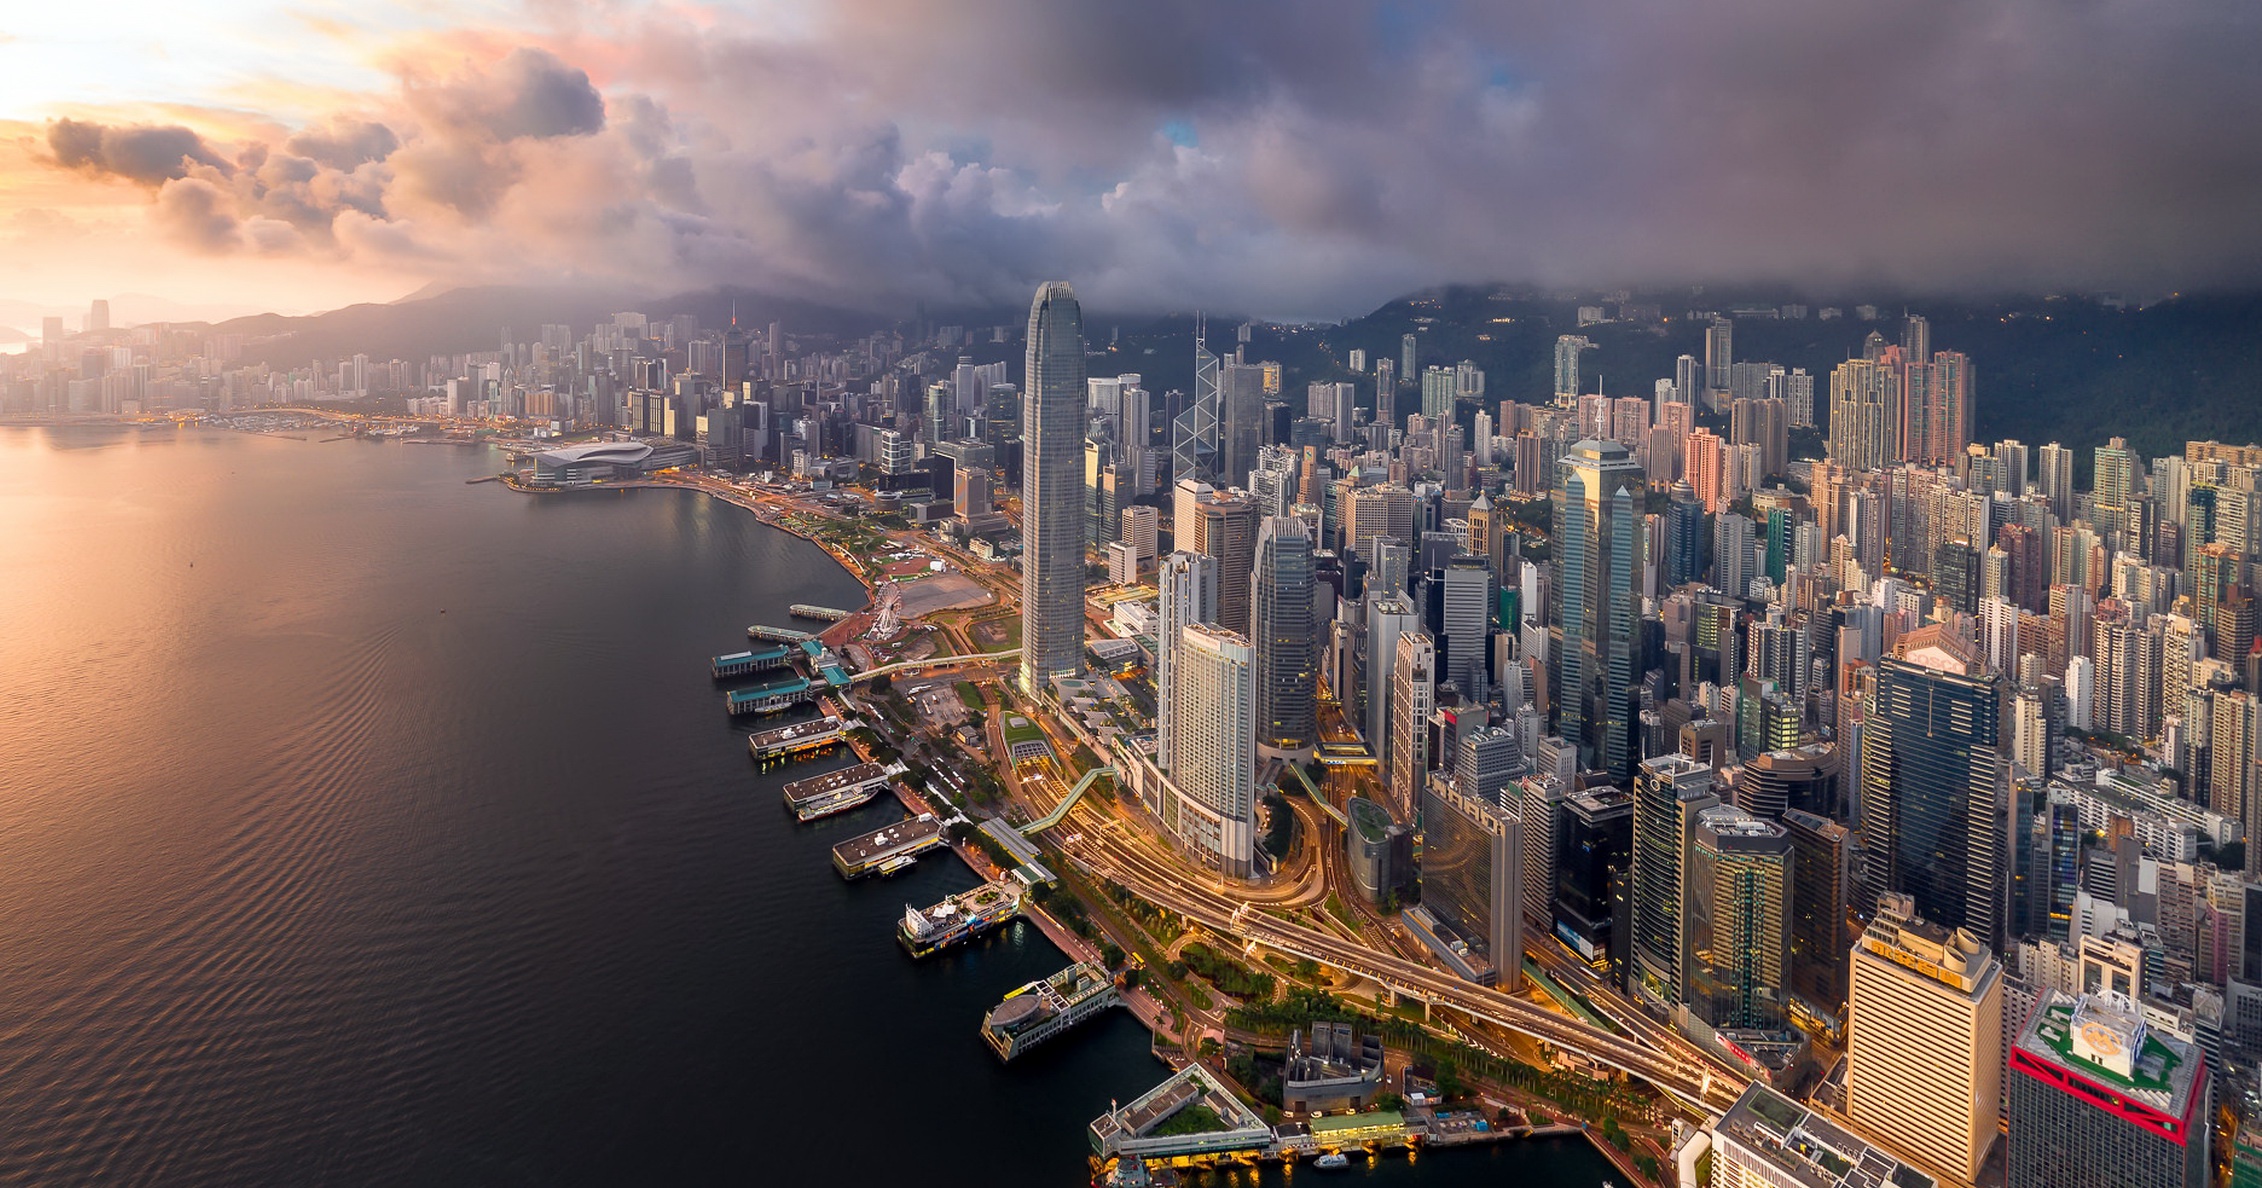 General 2262x1188 Hong Kong Asia China city cityscape aerial view